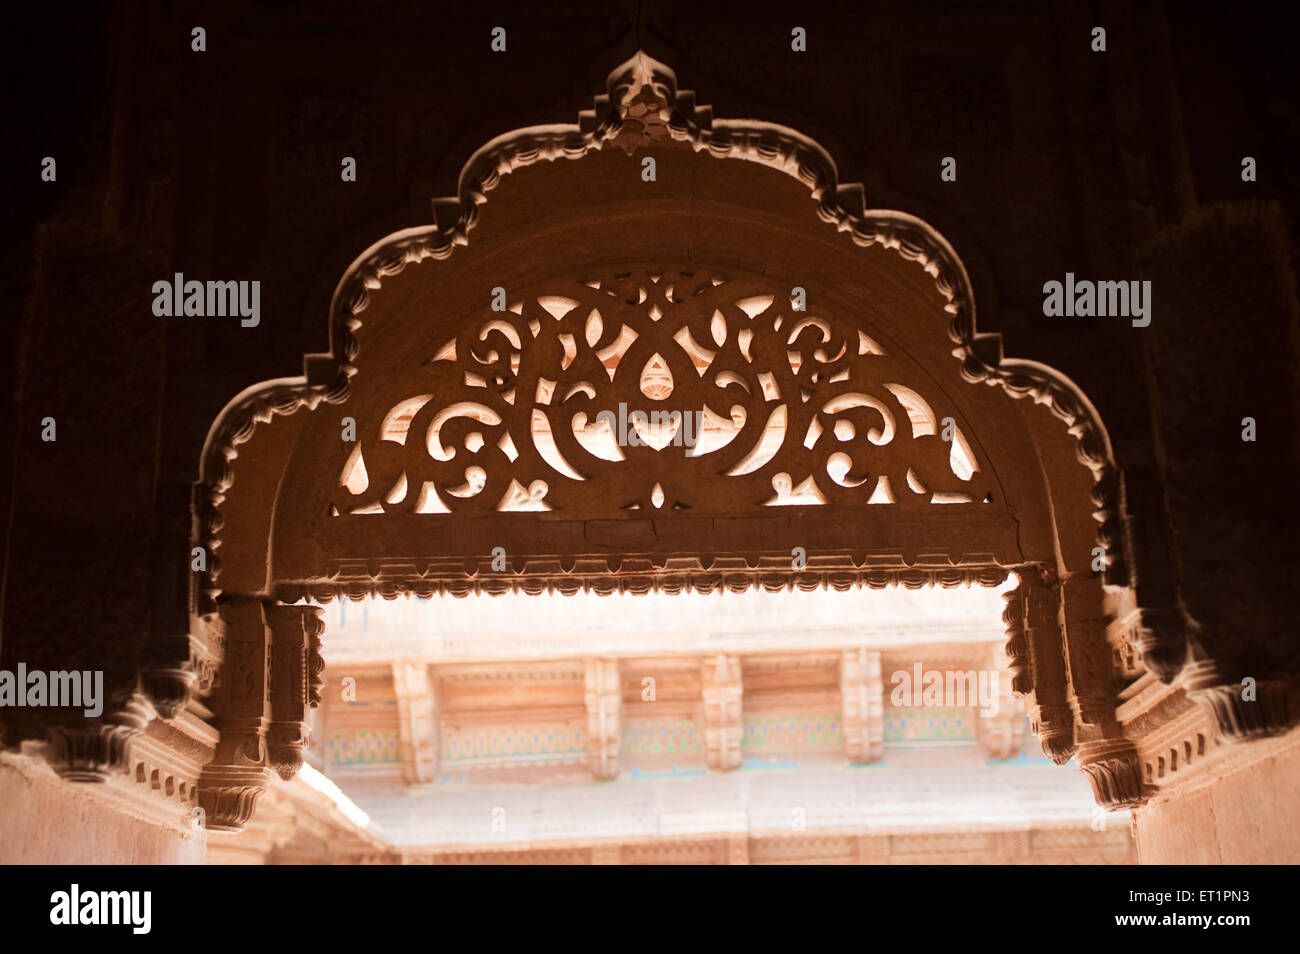 Jali design, Jaali pattern, perforated stone, latticed screen, Man Mandir Palace, Man Singh Palace, Gwalior fort, Gwalior, Madhya Pradesh, India, Asia Stock Photo